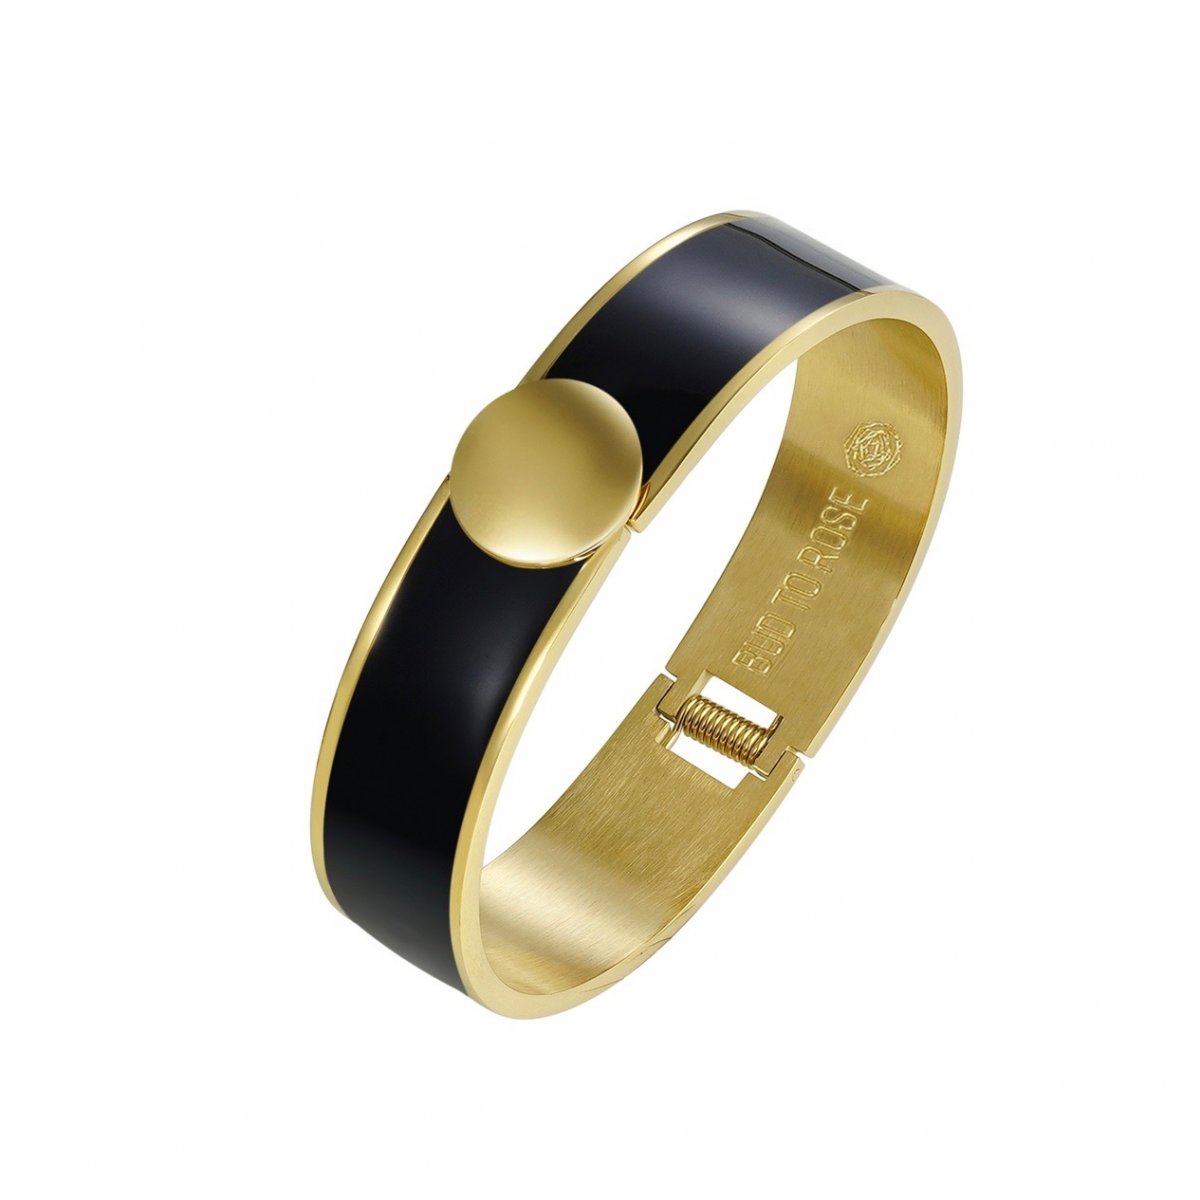 Capri enamelLarge Bracelet black/gold